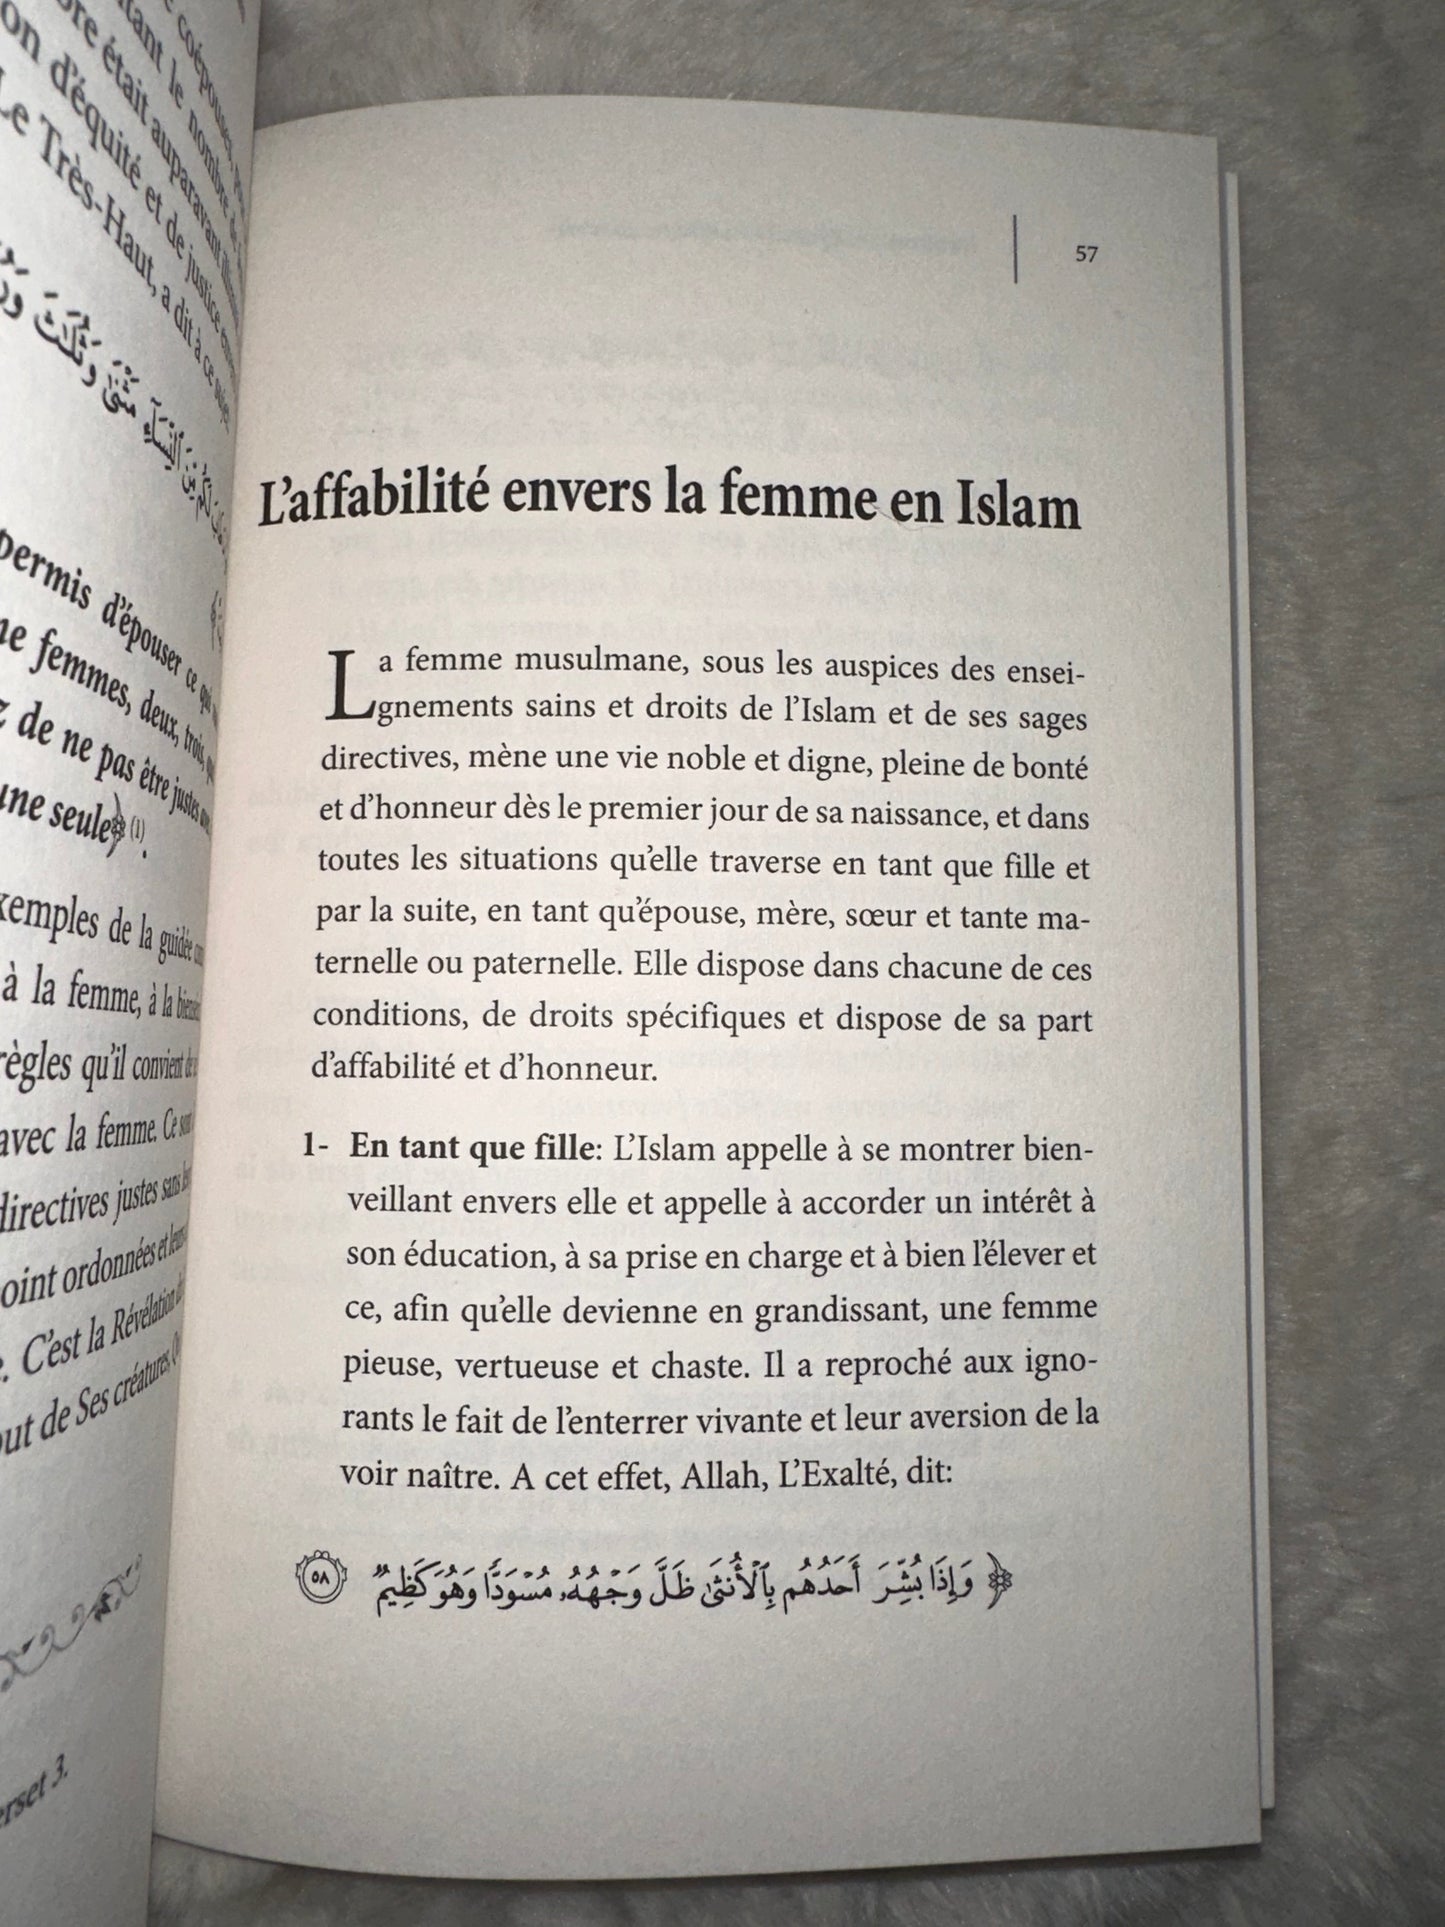 Honneur Et Dignité De La Femme En Islam, De Cheikh 'Abd Ar Razzâq Ibn 'Abd Al Muhsin Al Badr